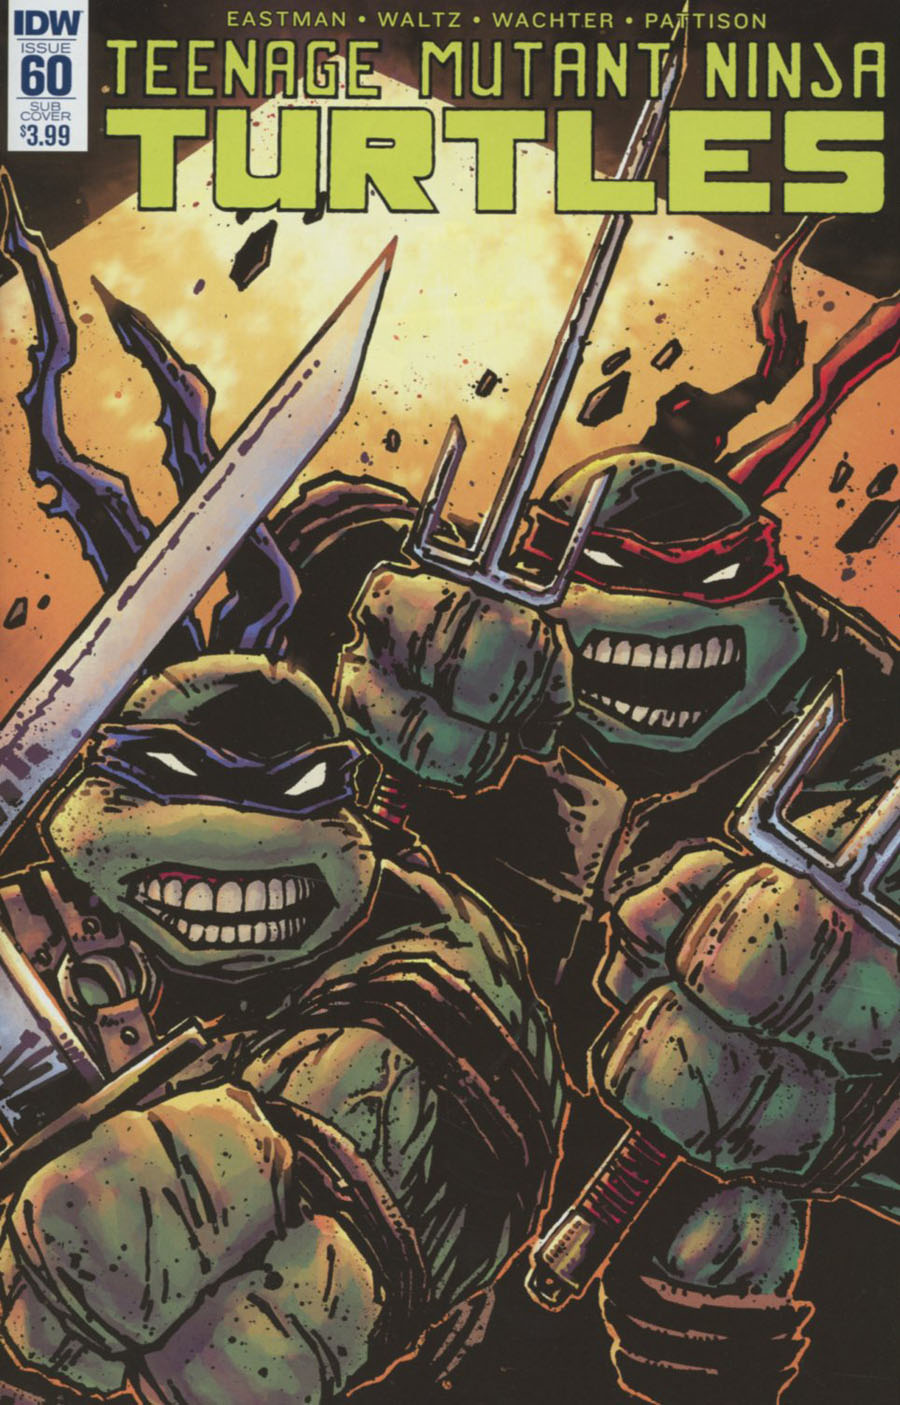 Teenage Mutant Ninja Turtles Vol 5 #60 Cover B Variant Kevin Eastman Subscription Cover